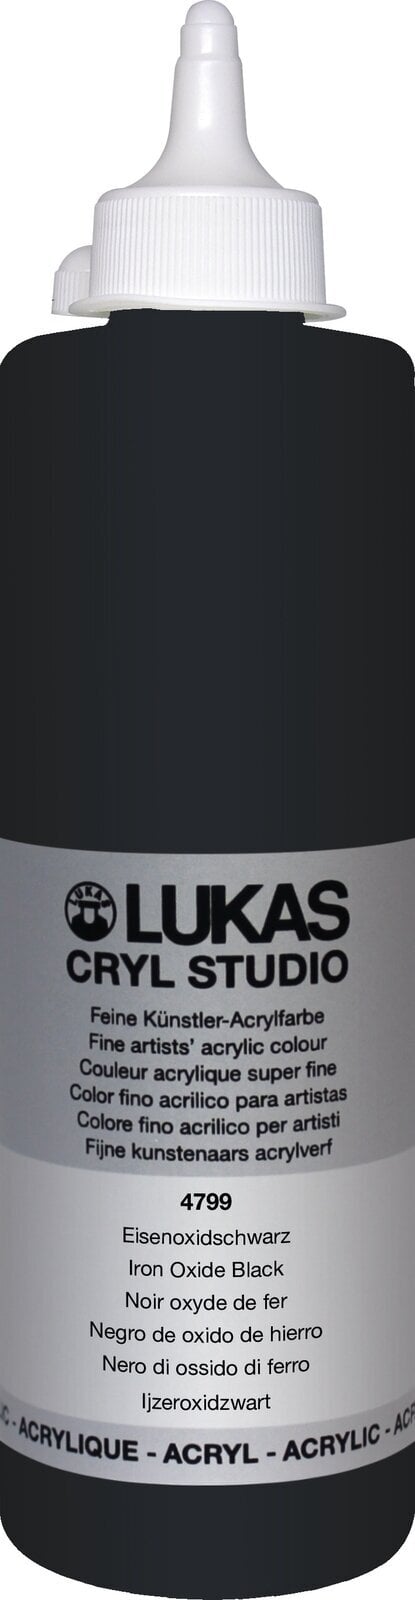 Akrylmaling Lukas Cryl Studio Acrylic Paint Plastic Bottle Akrylmaling Iron Oxid Black 500 ml 1 stk.